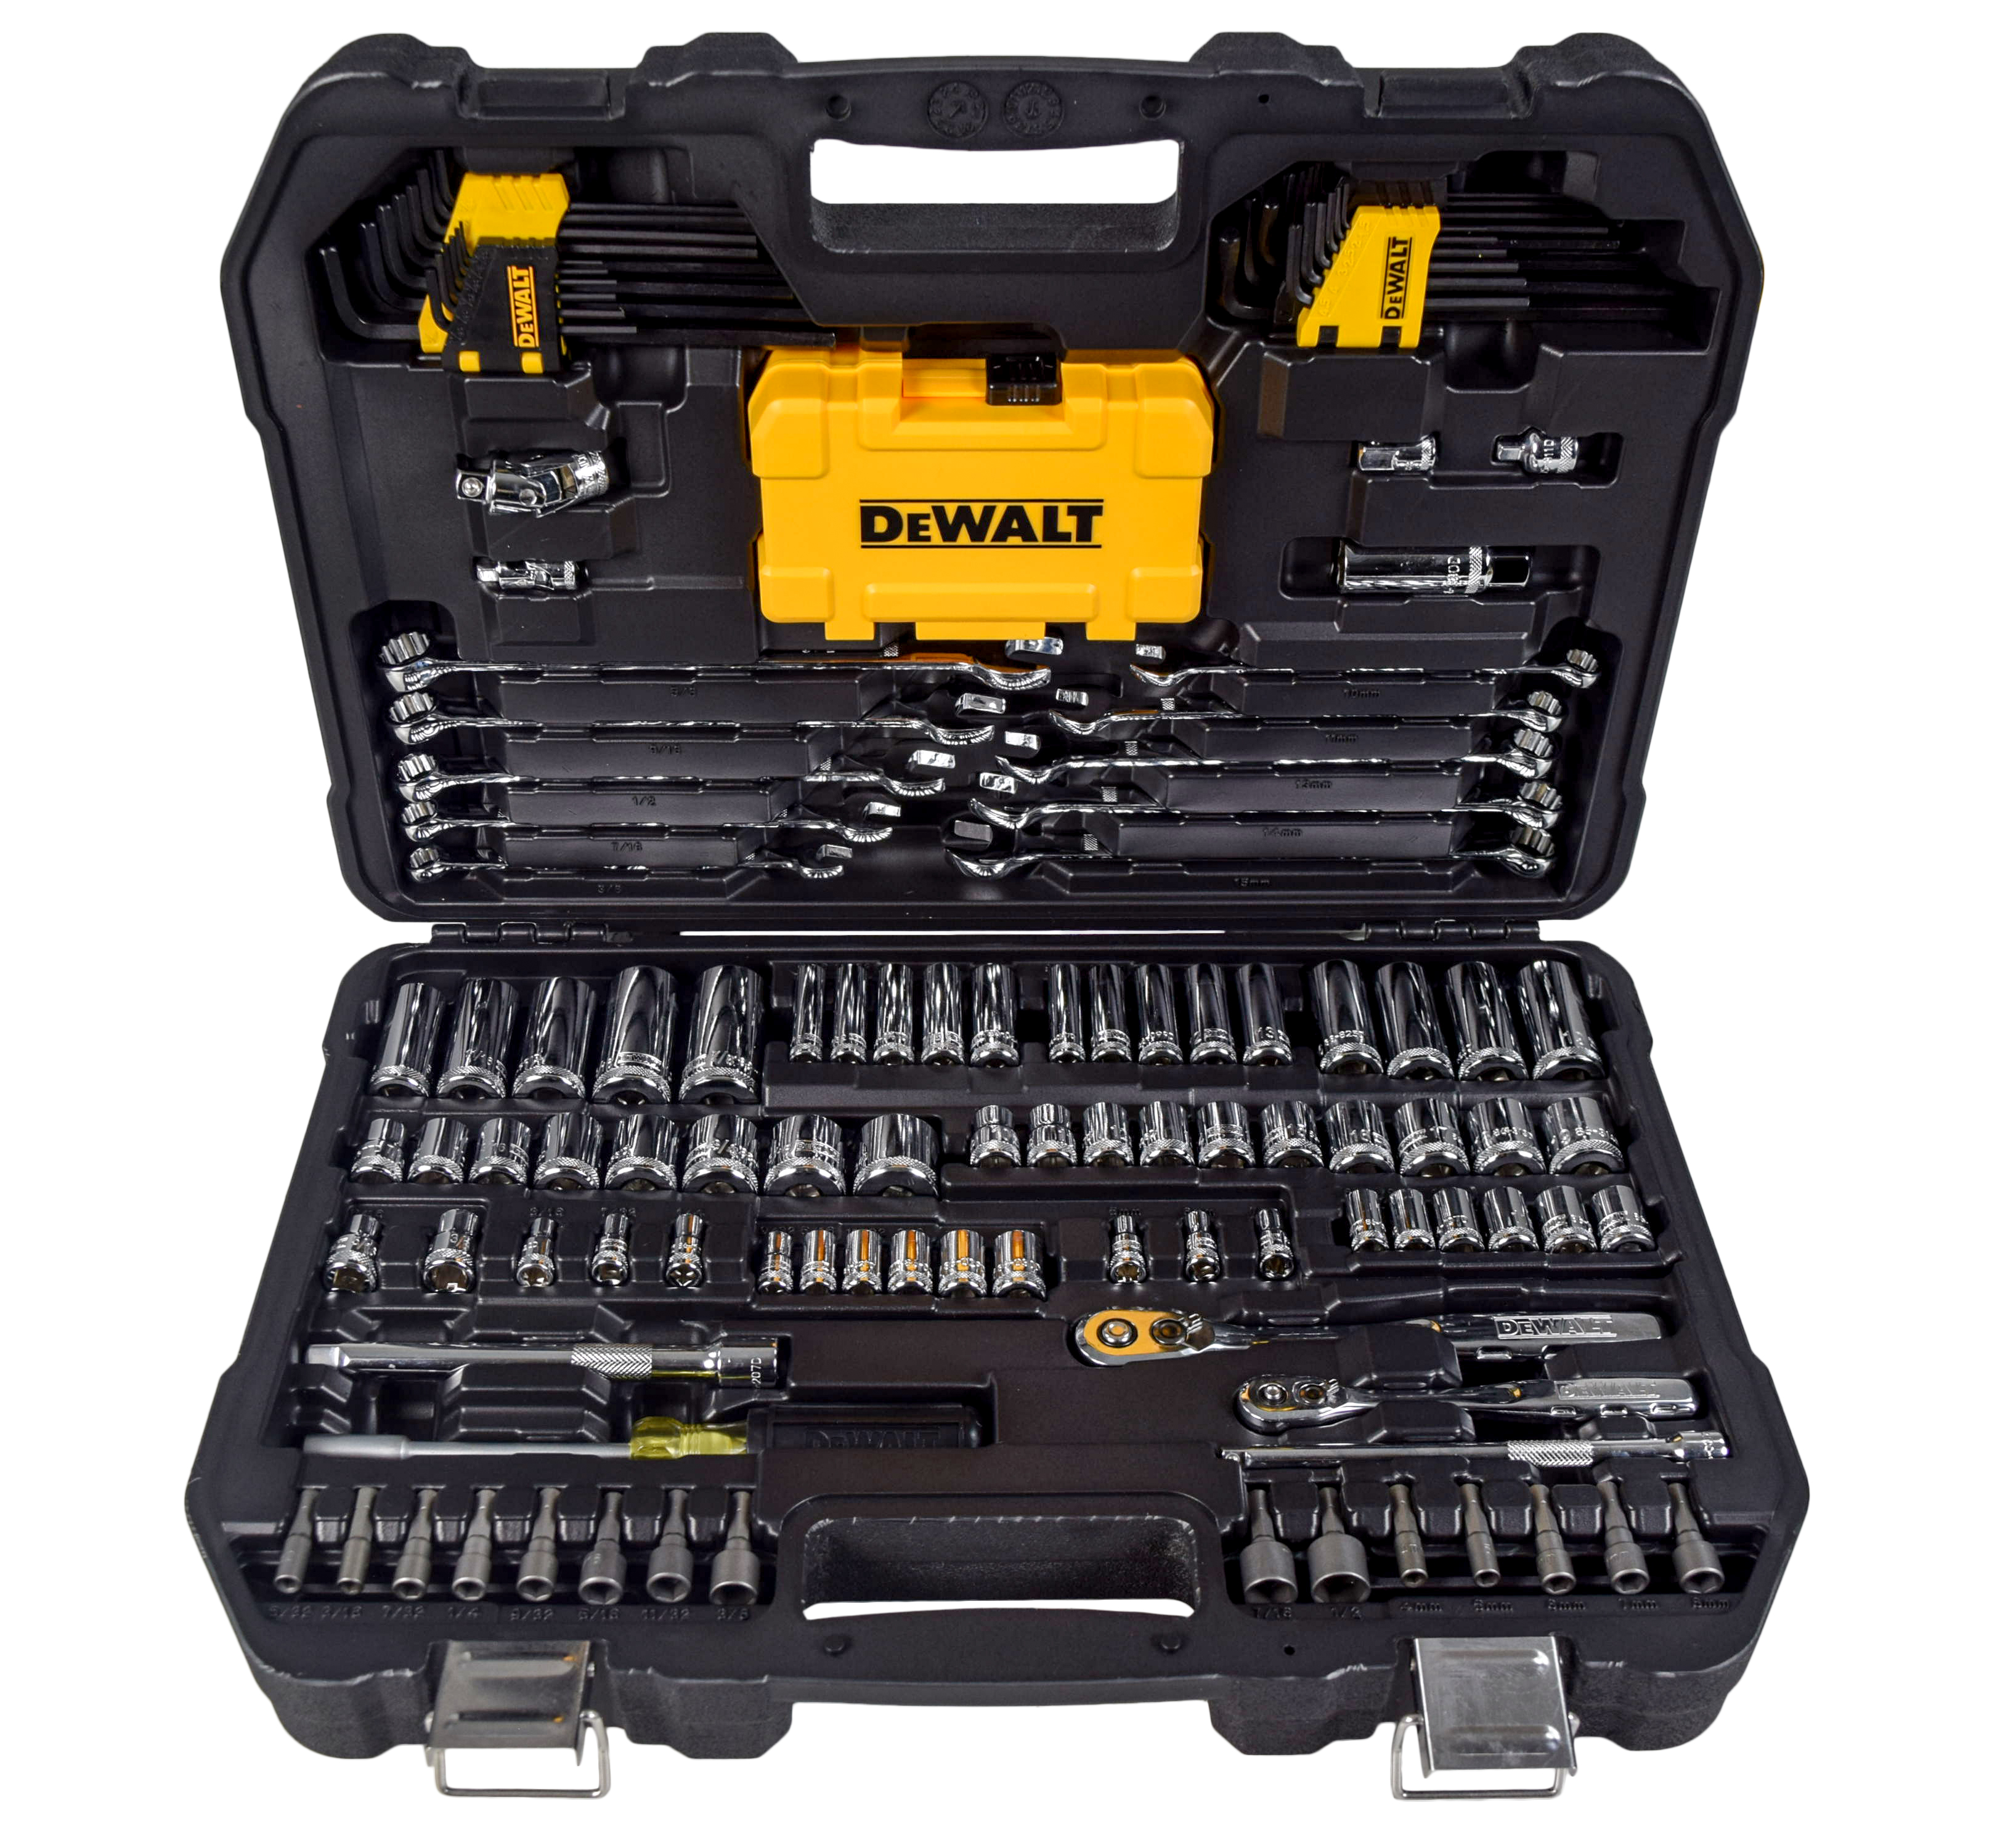 Dewalt DWMT73802 Mechanics Tool Kit Set with Case (142 Piece) - image 2 of 8